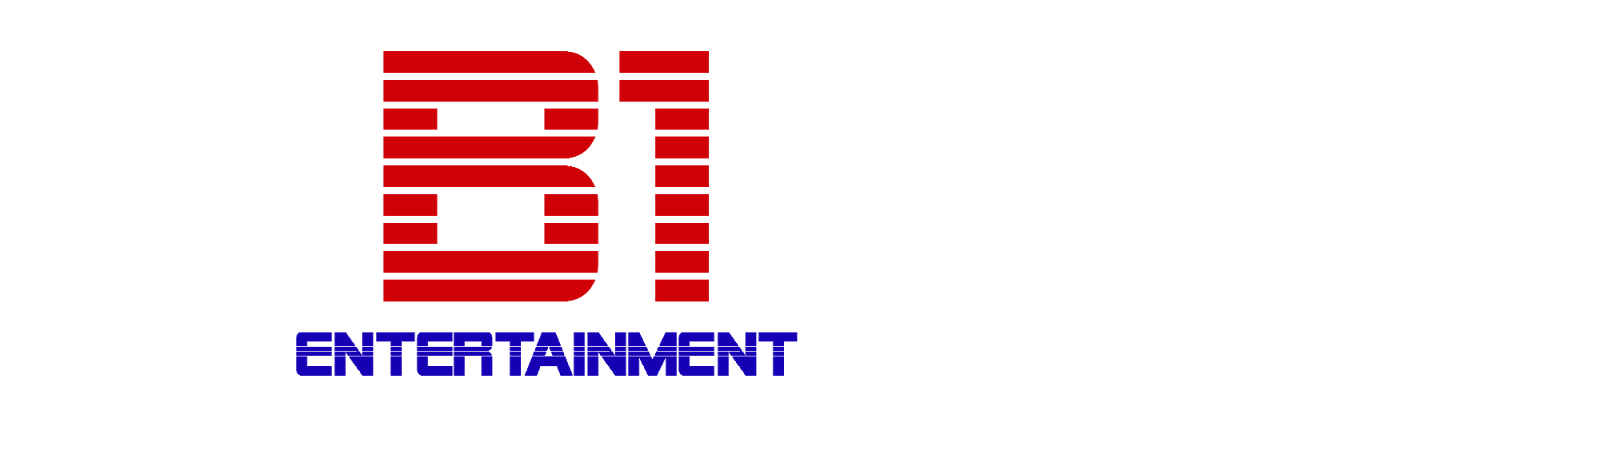 B1 Entertainment